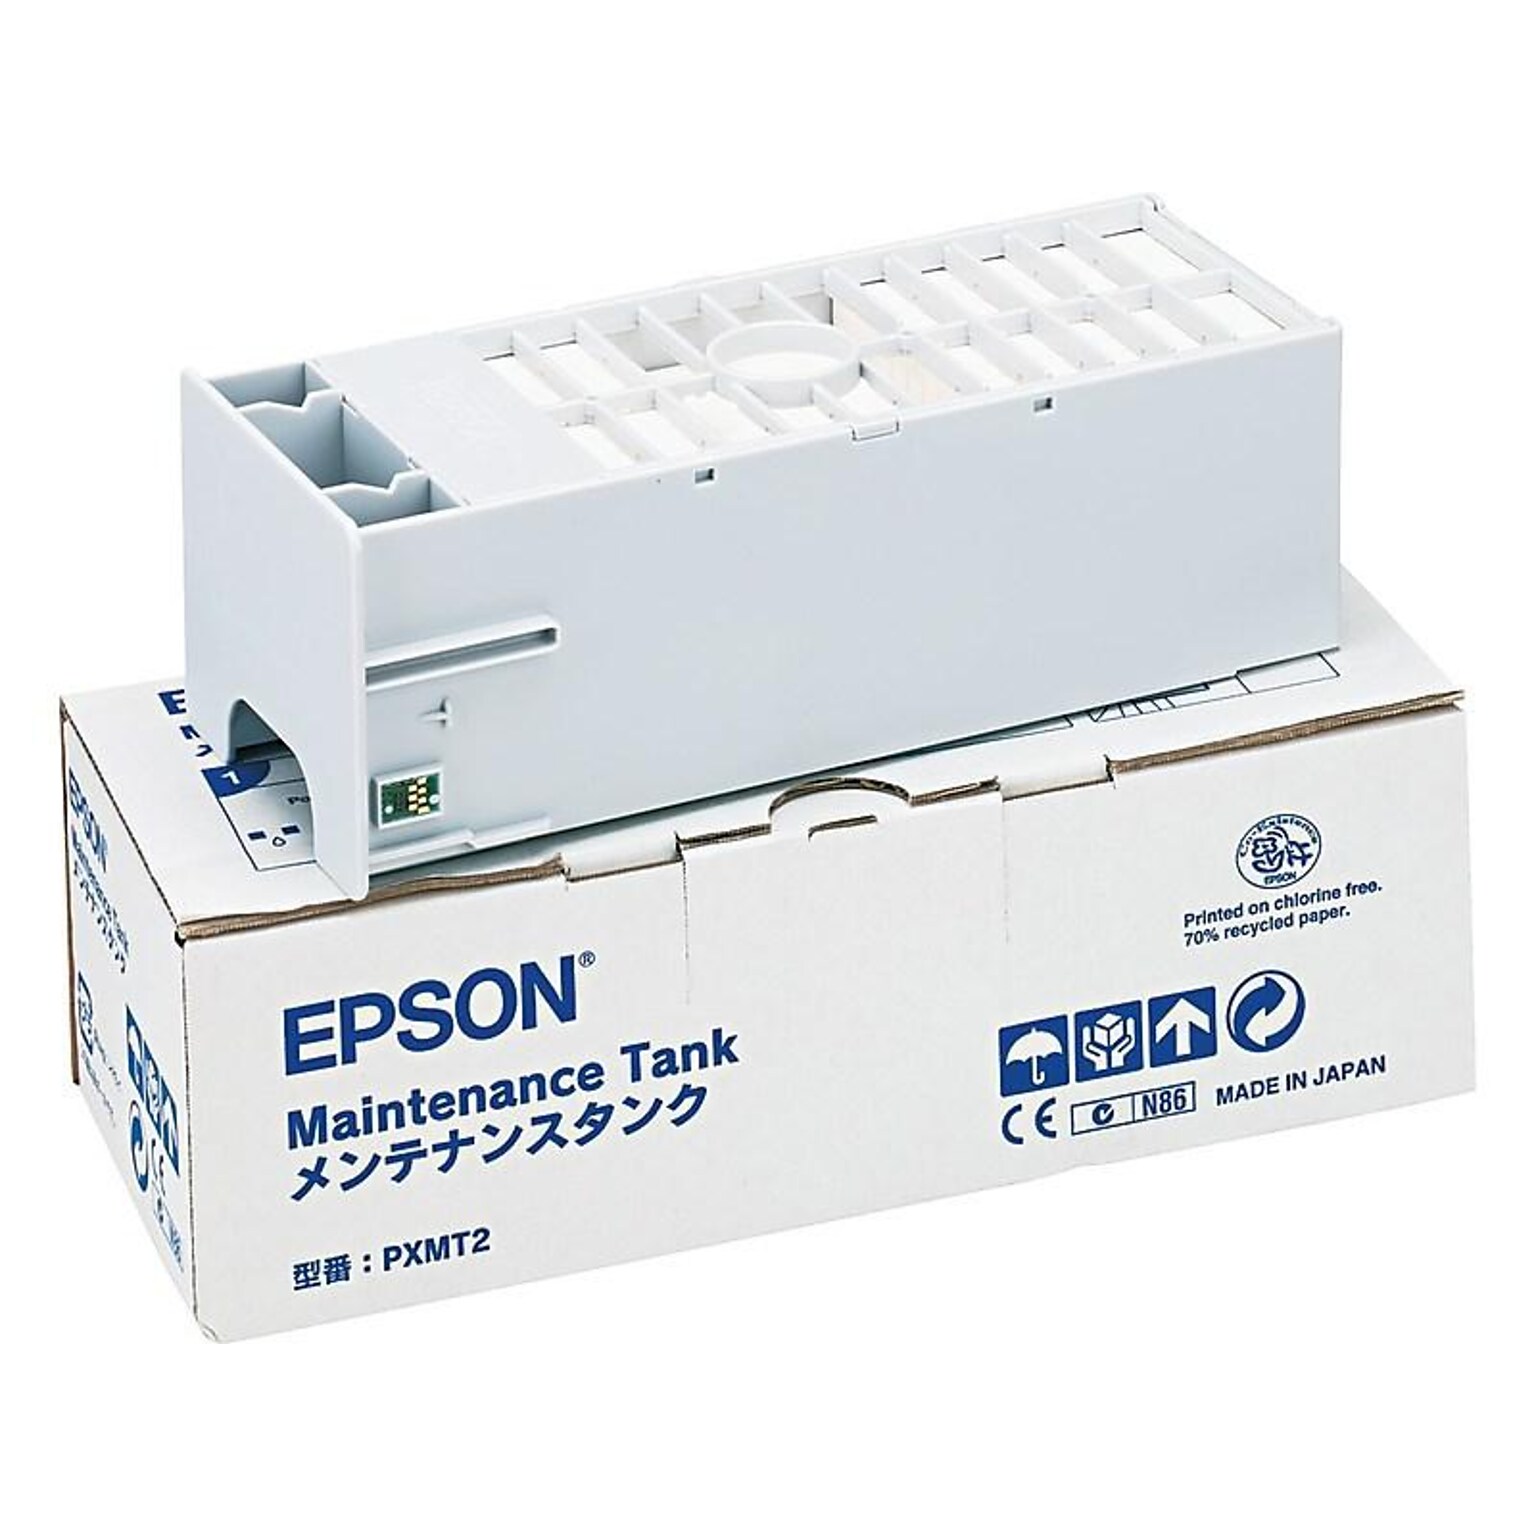 Epson Ink Maintenance Tank, White (C12C890191)